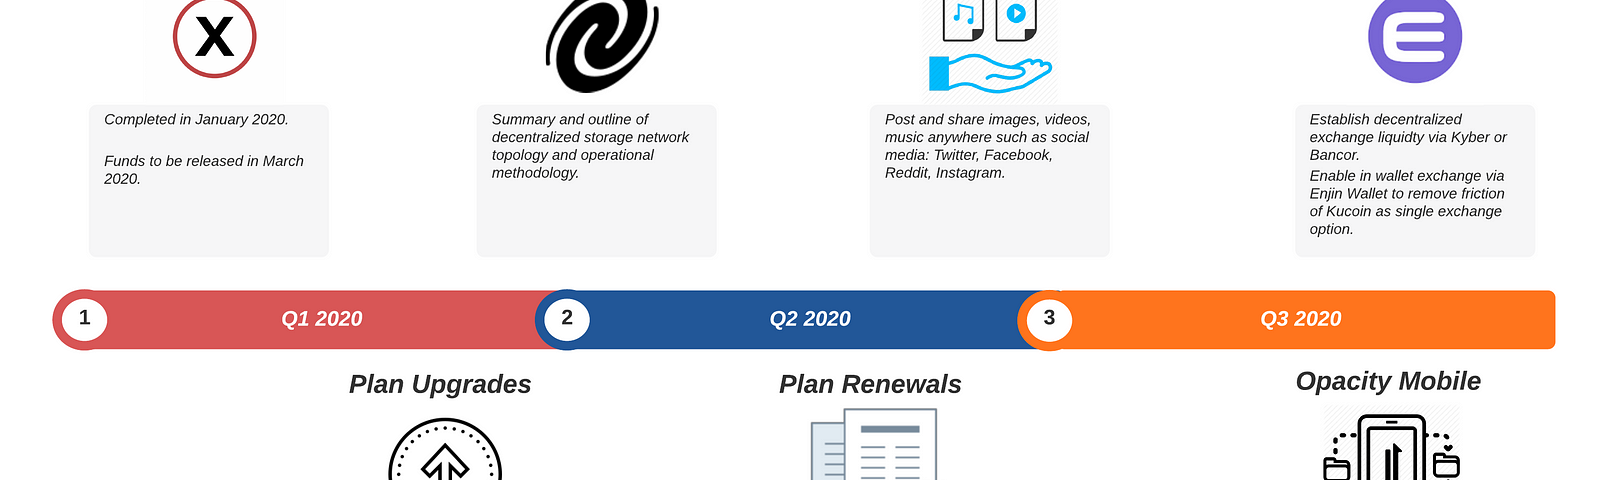 Opacity 2020 Roadmap